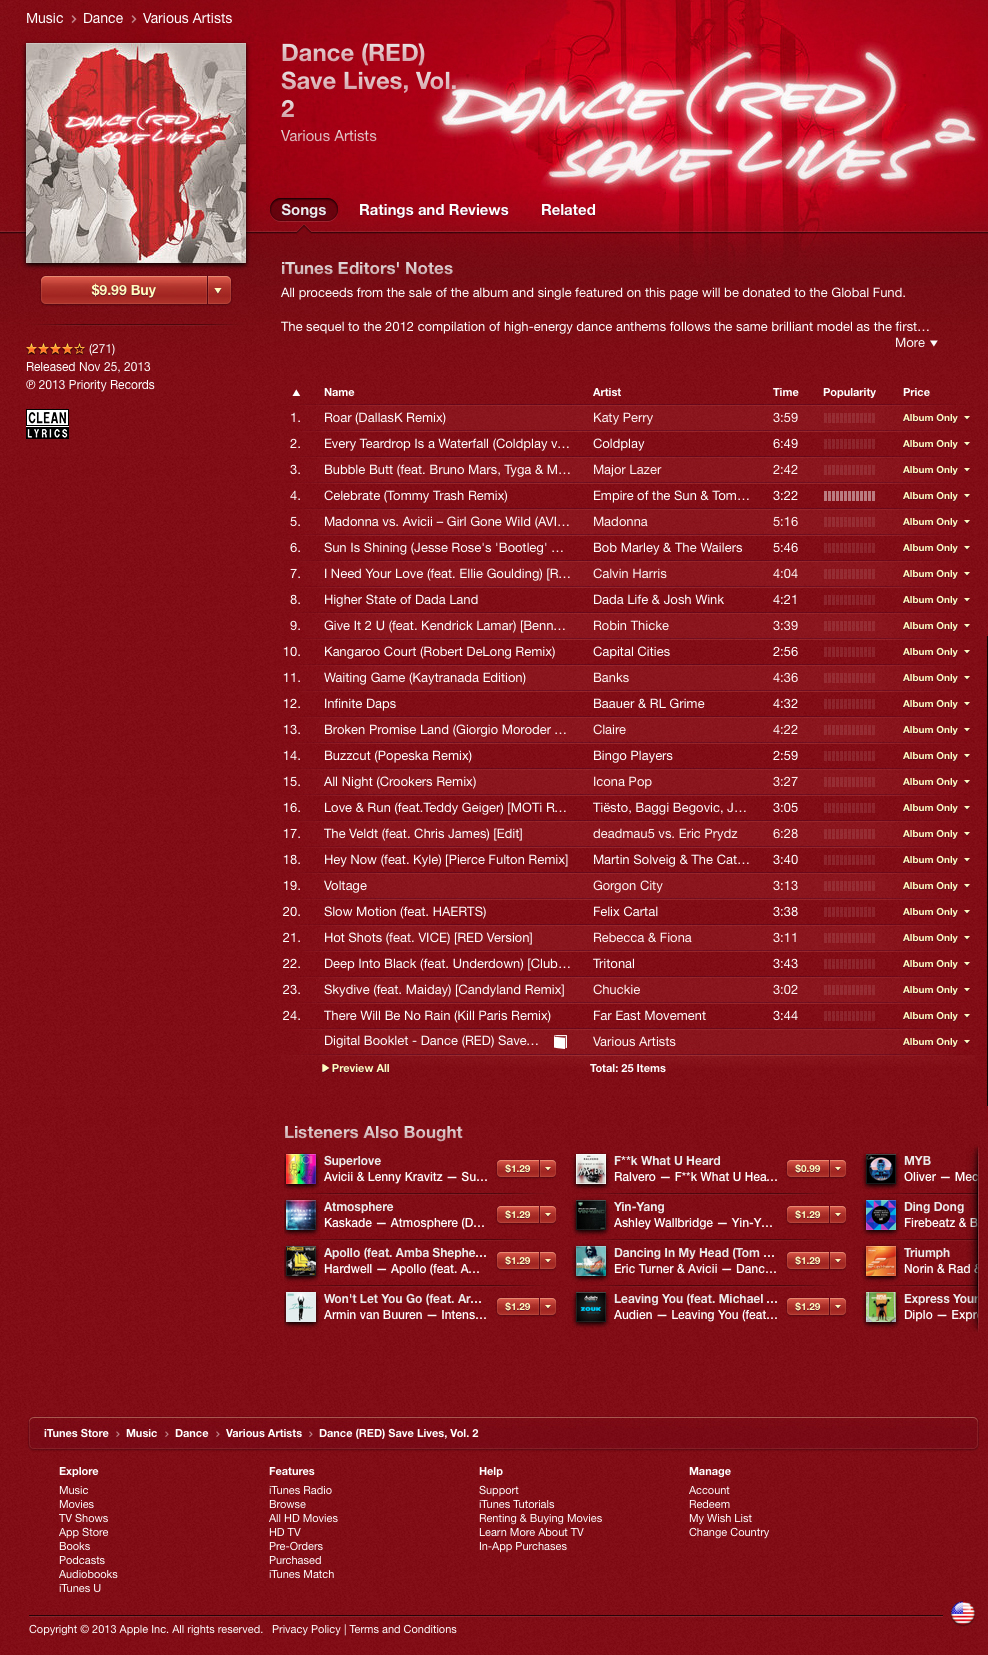 itunes app store Album Dance (RED) Save Lives Vol. 2